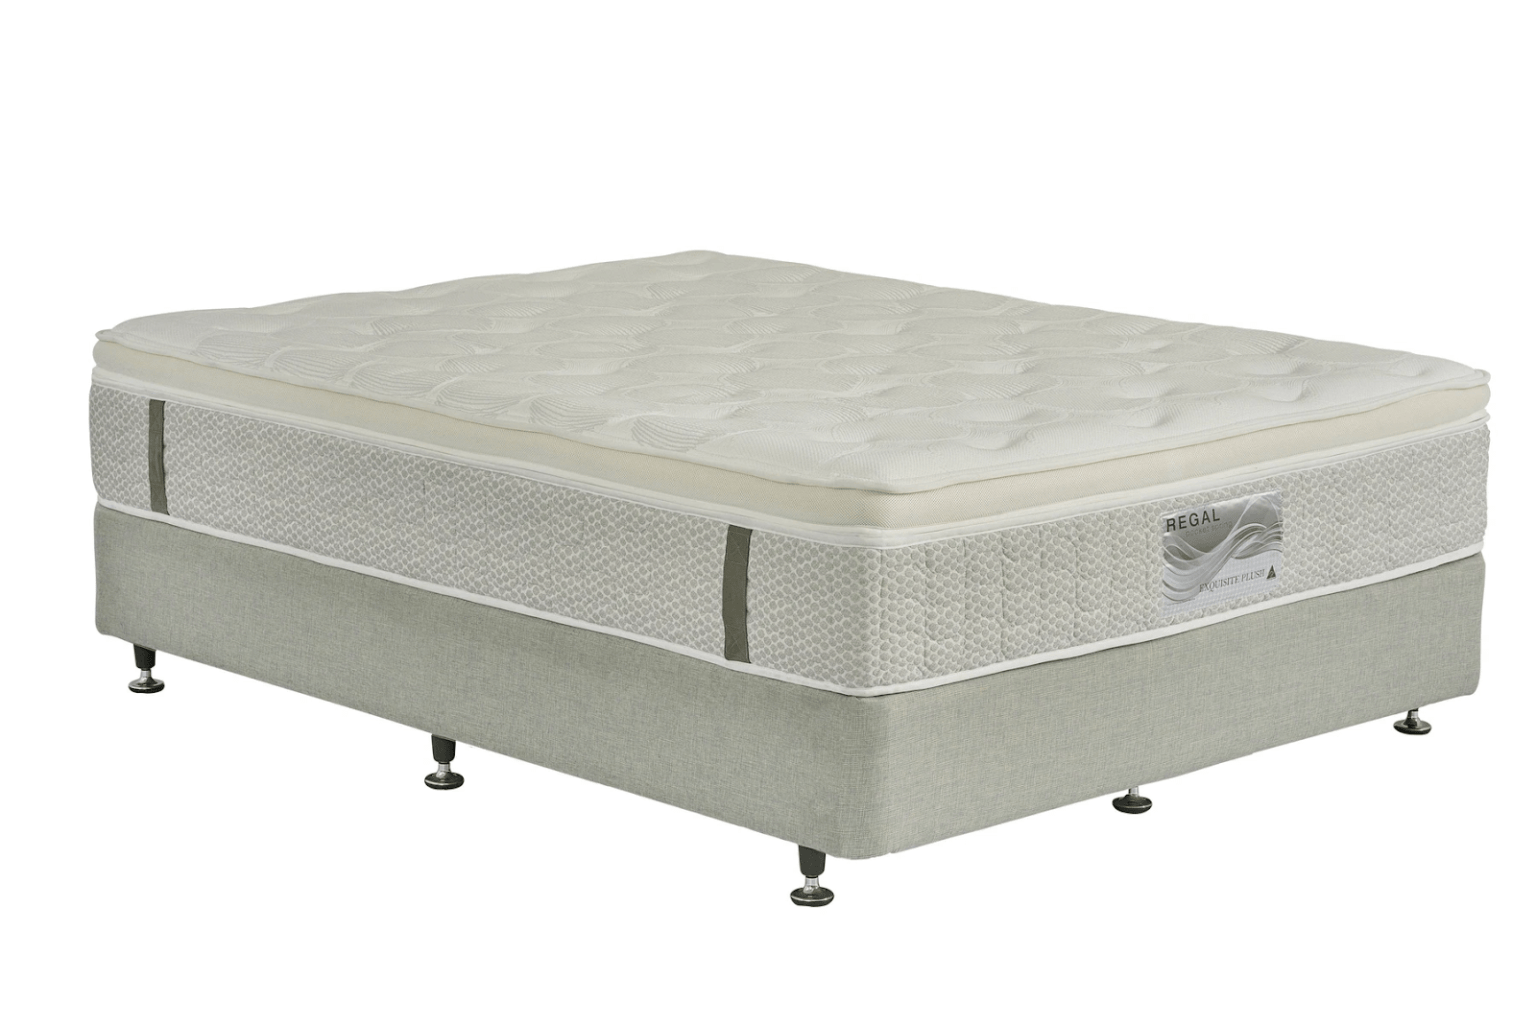 regal exquisite plush mattress review